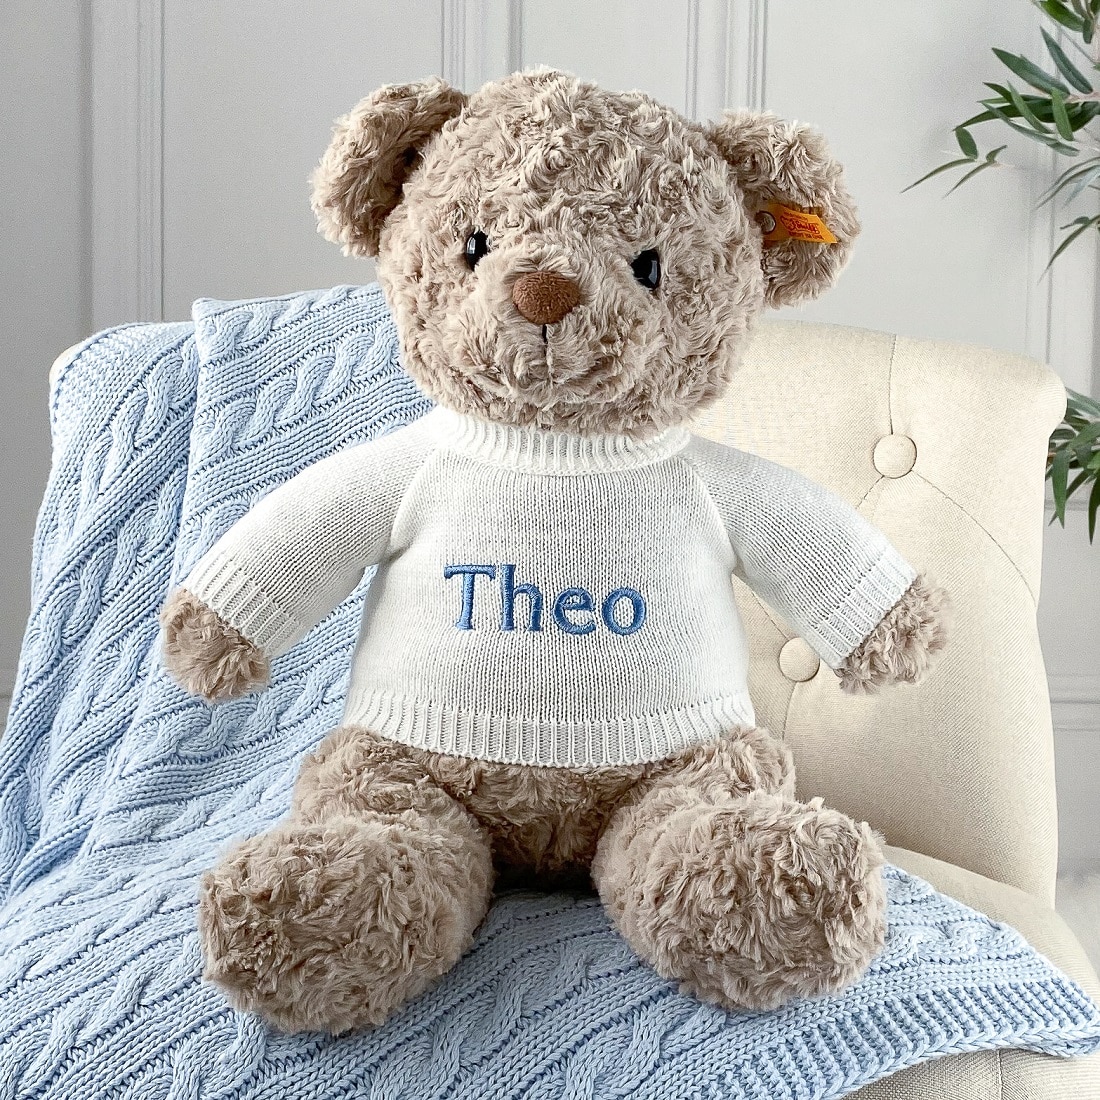 Personalised Steiff honey teddy bear large soft toy